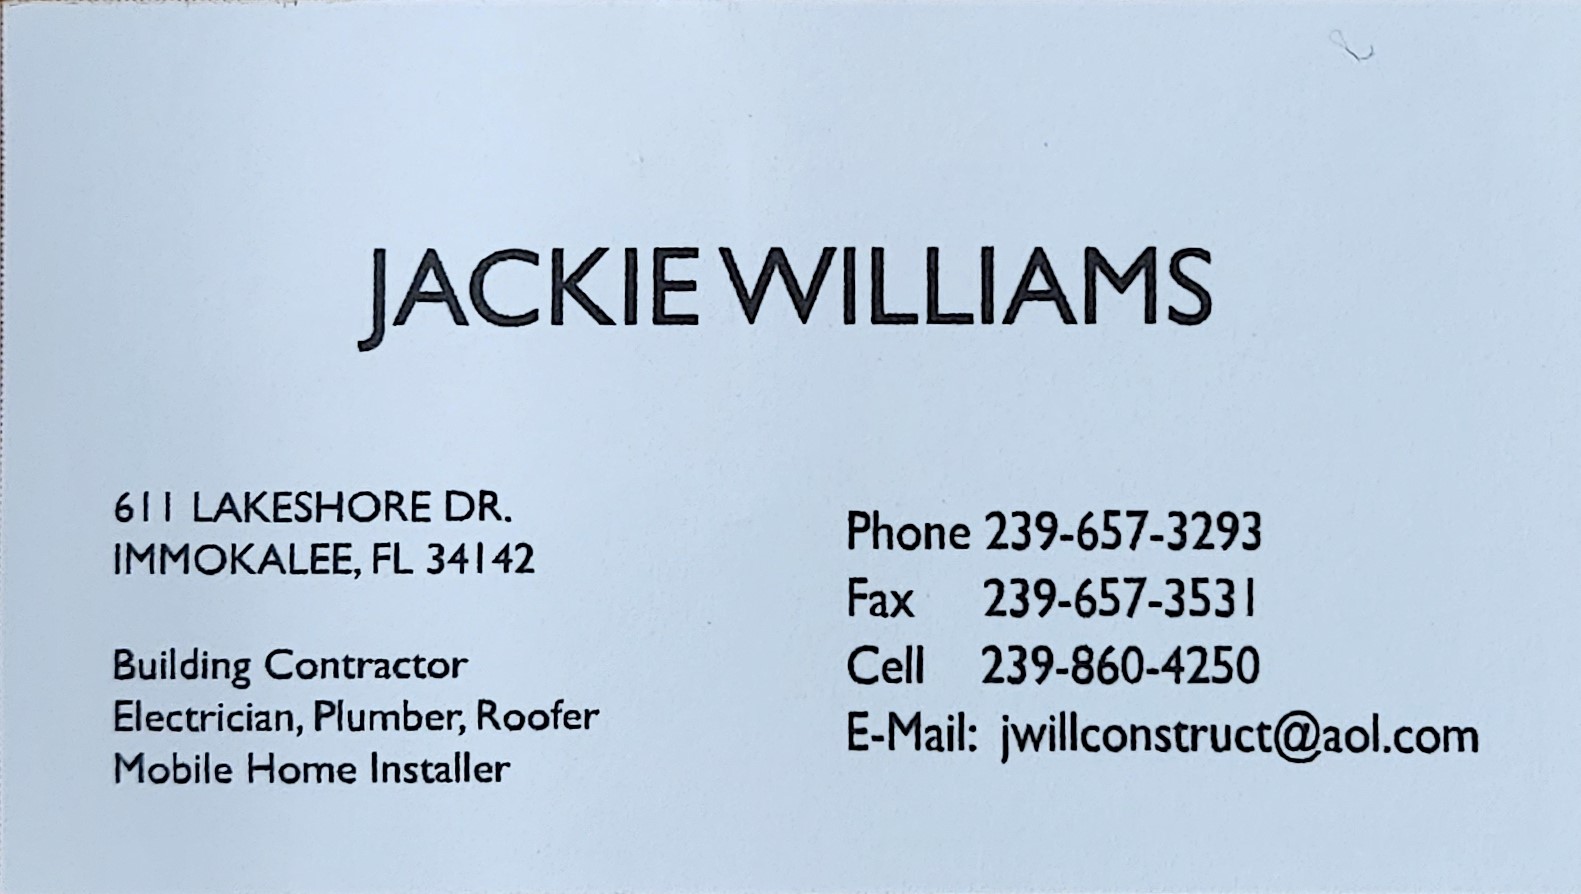 Jackie Williams Card